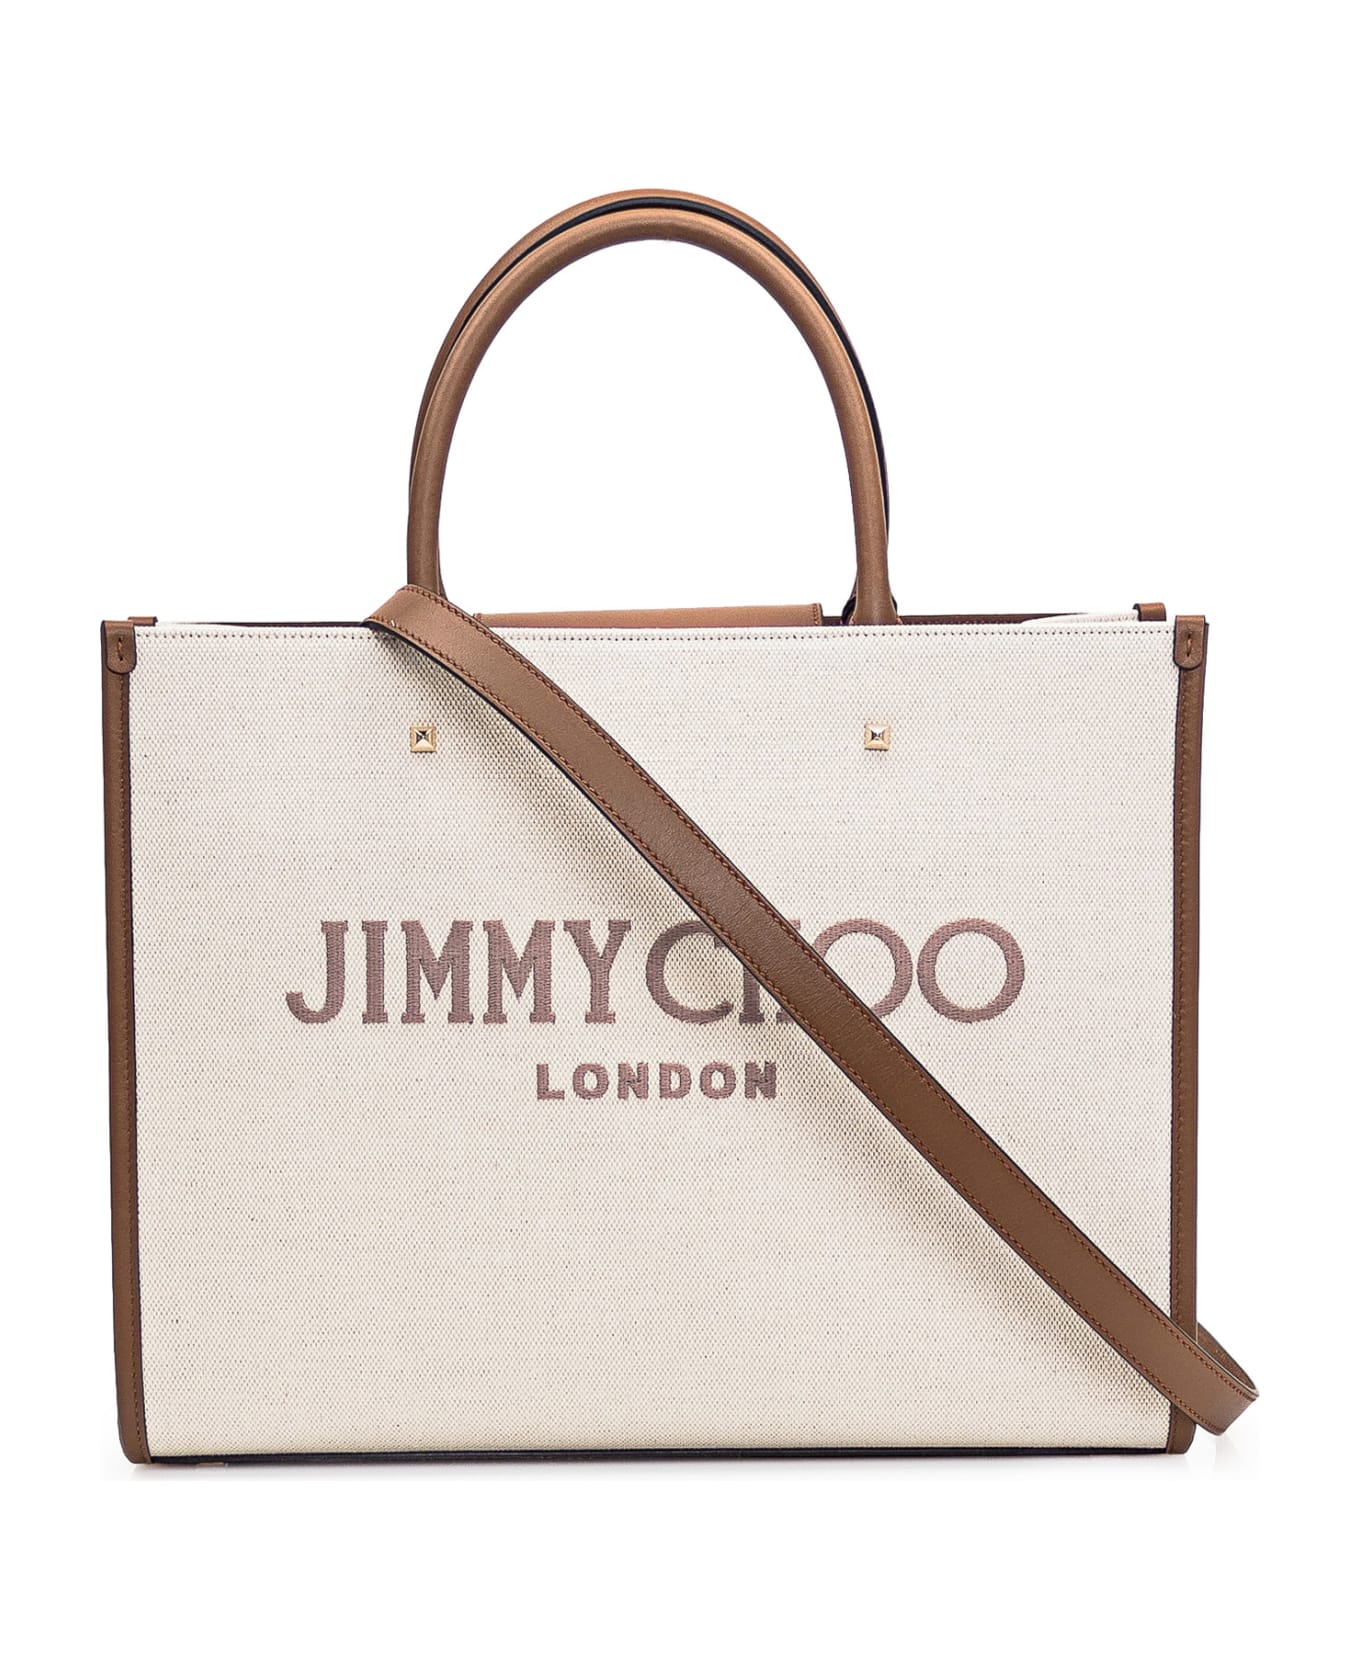 Jimmy Choo Avenue M Tote Bag - NATURAL/TAUPE/DARK TAN/LIGHT GOLD